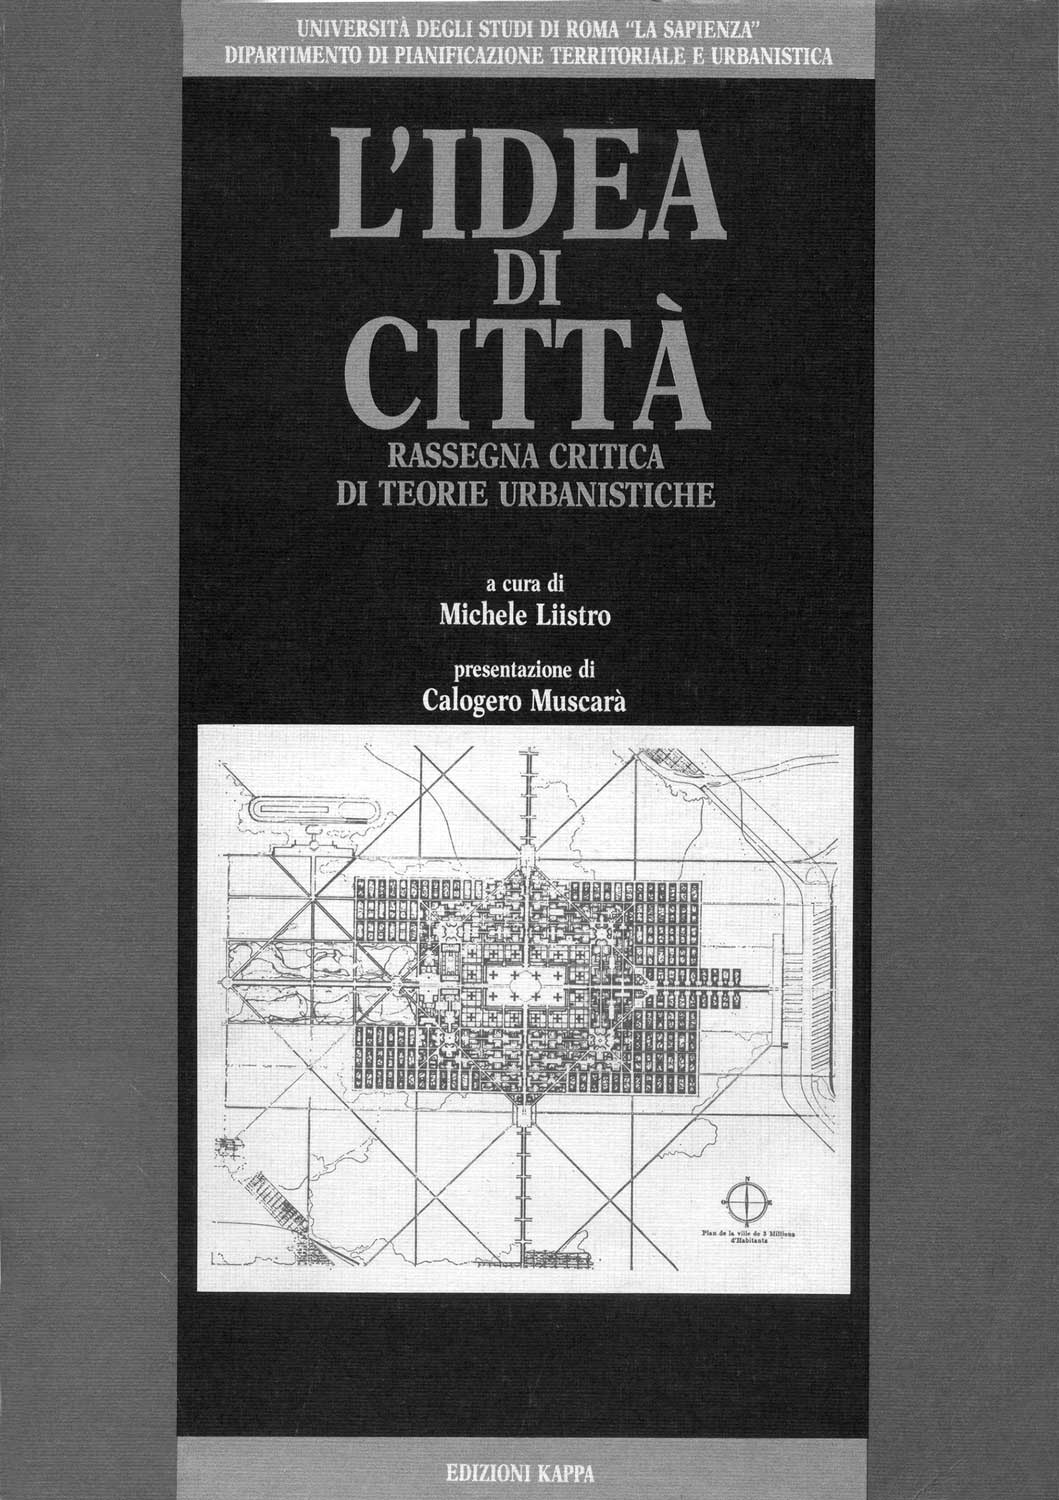 18 - L’idea di città. Rassegna critica di teorie urbanistiche, Edizioni Kappa, Roma 1985 - Copertina